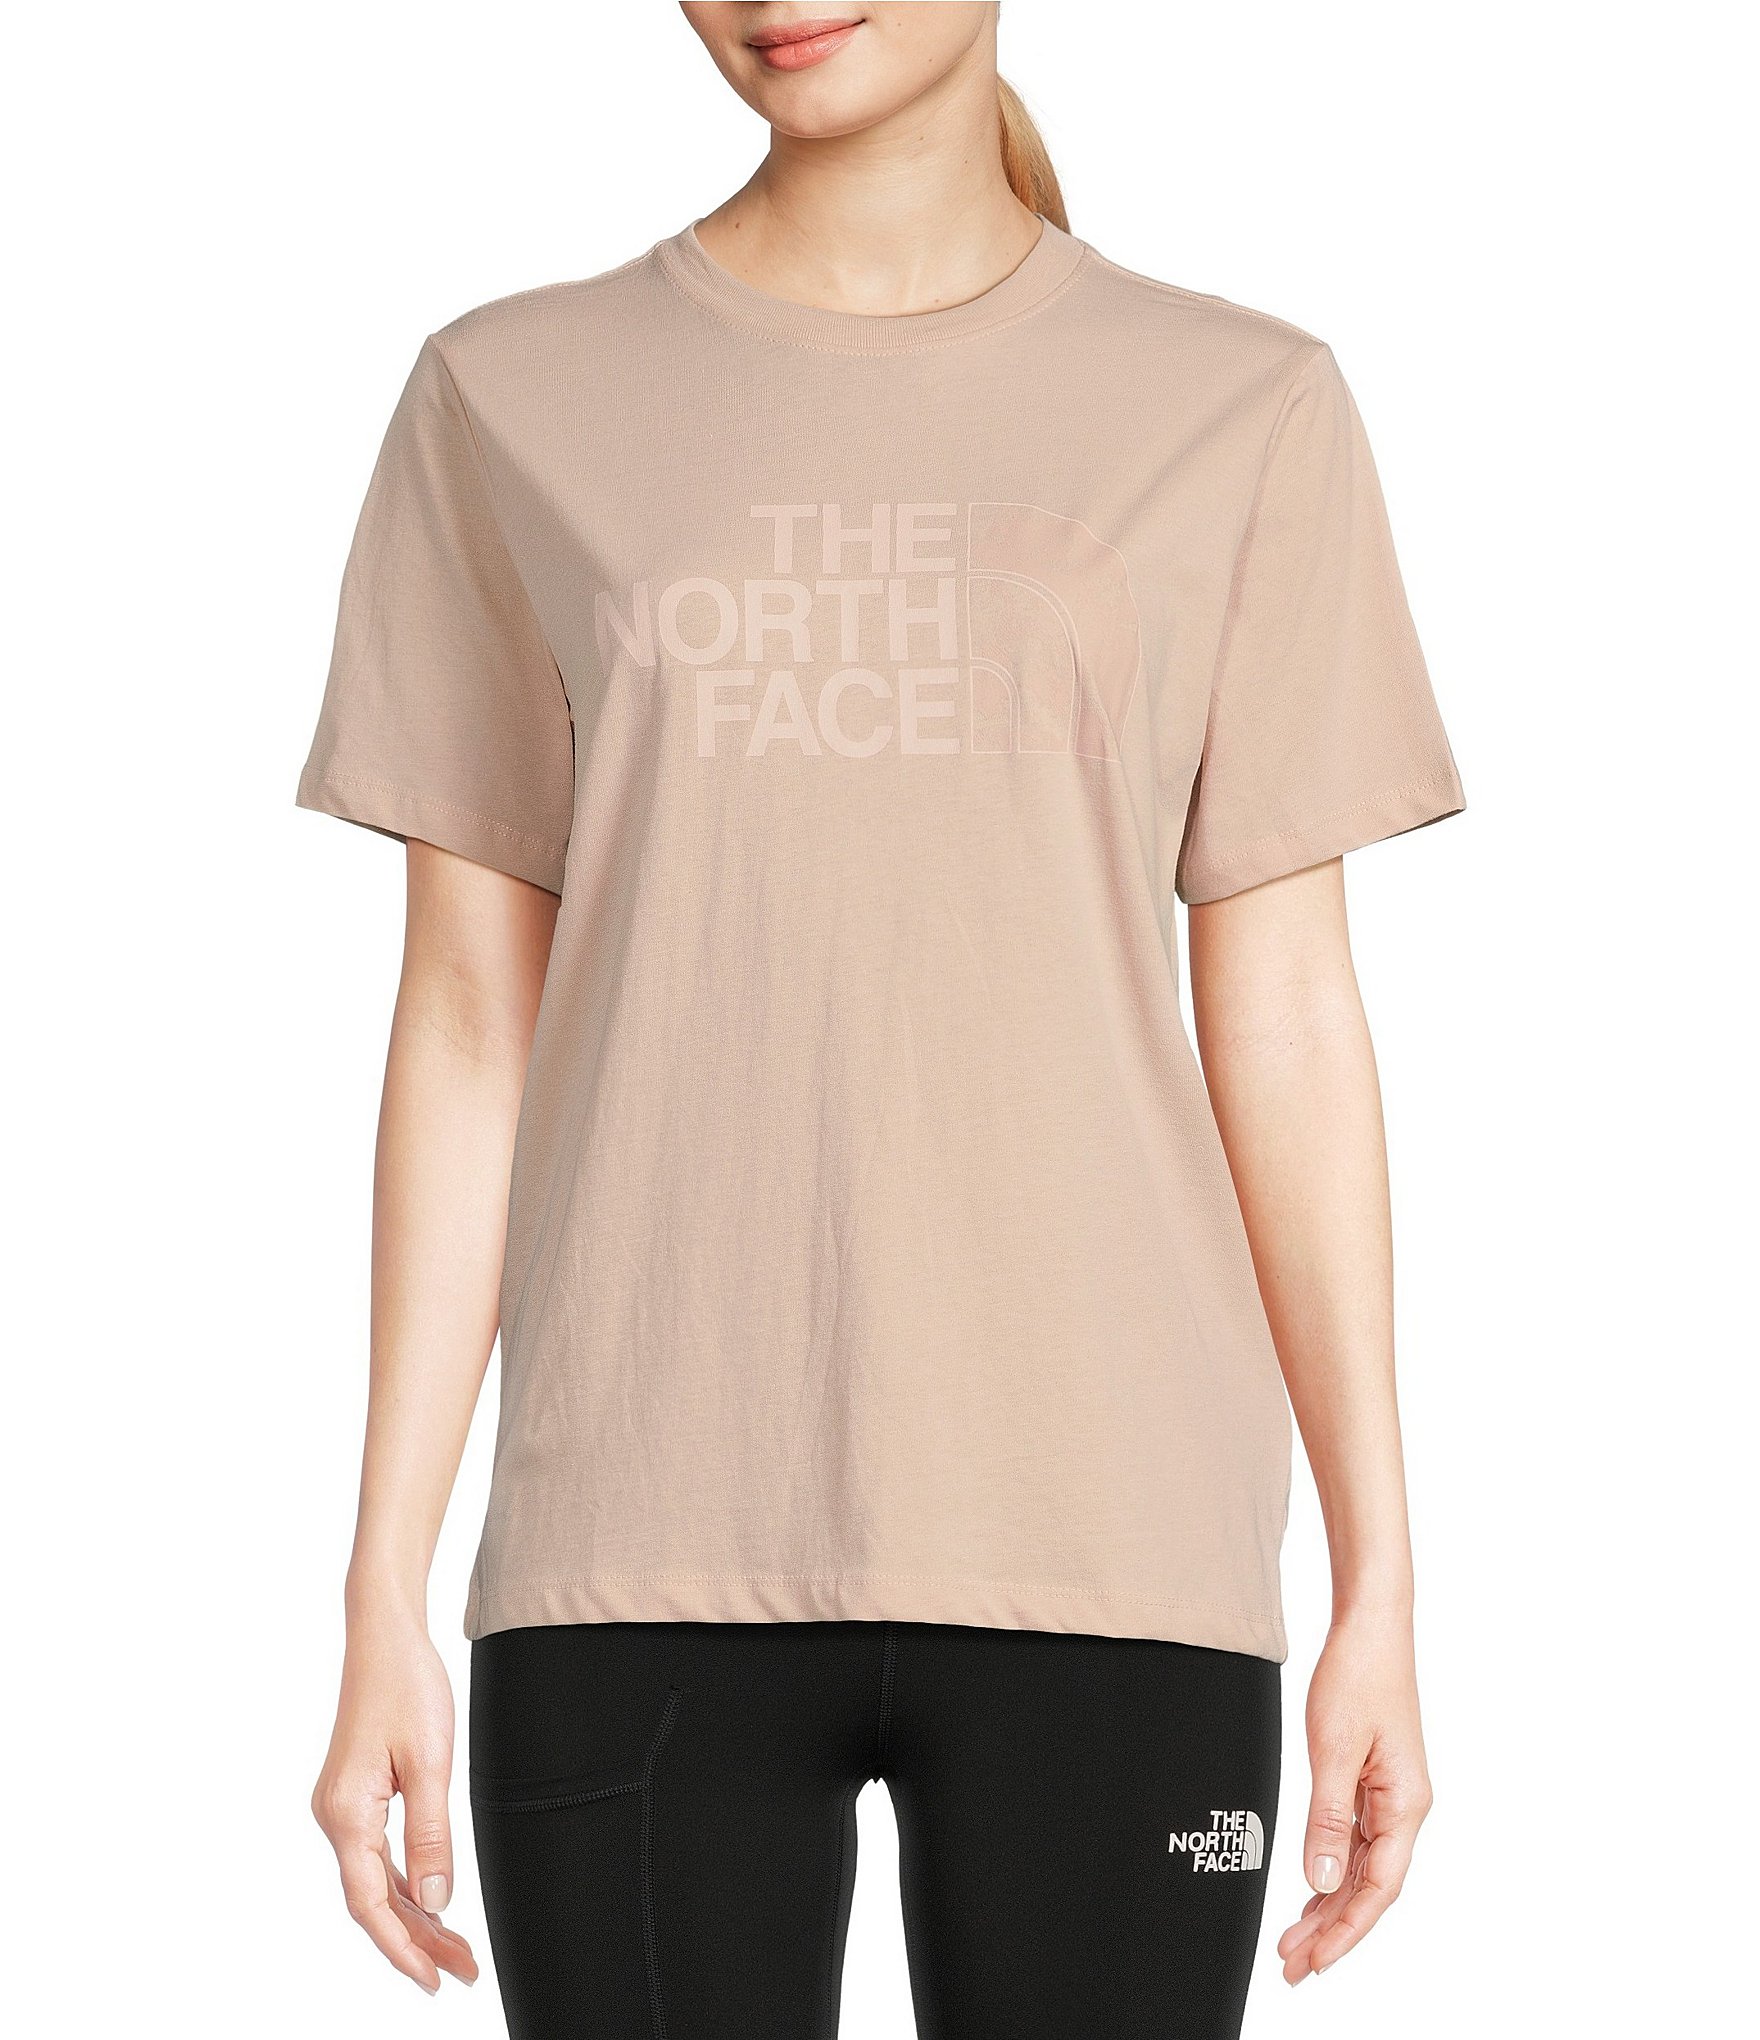 The North Face Short Sleeve Half Dome Tee Shirt | Dillard's